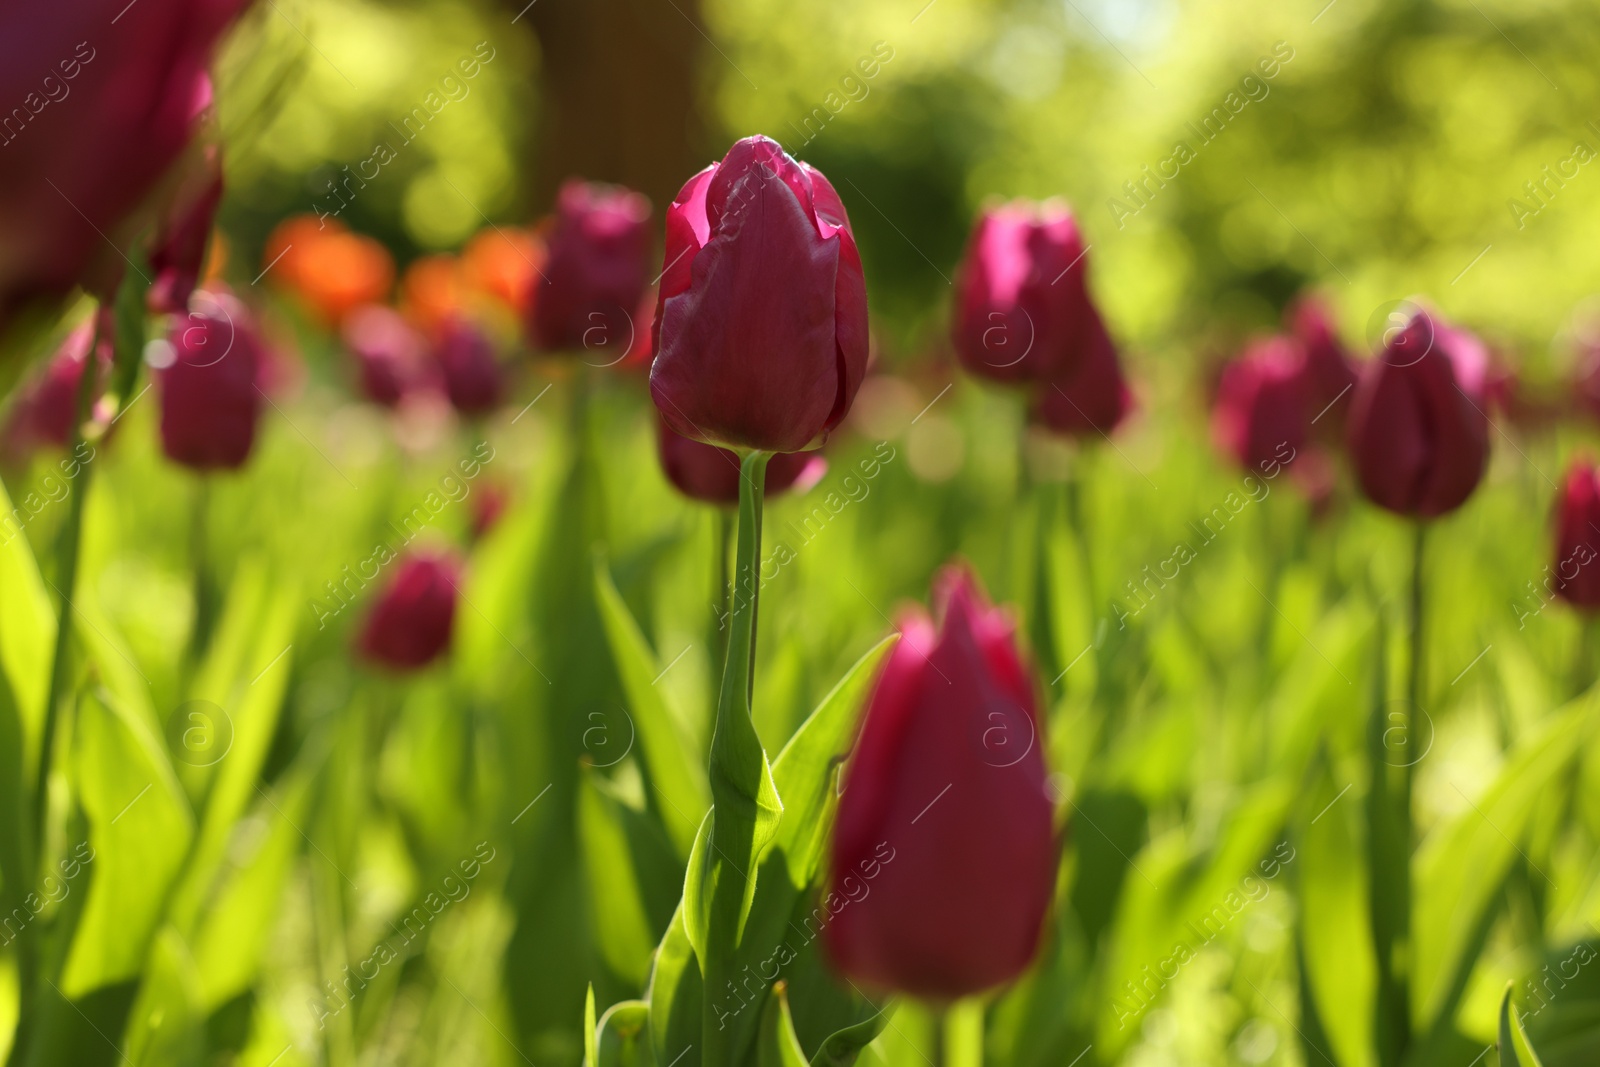 Photo of Beautiful purple tulips growing outdoors on sunny day, closeup